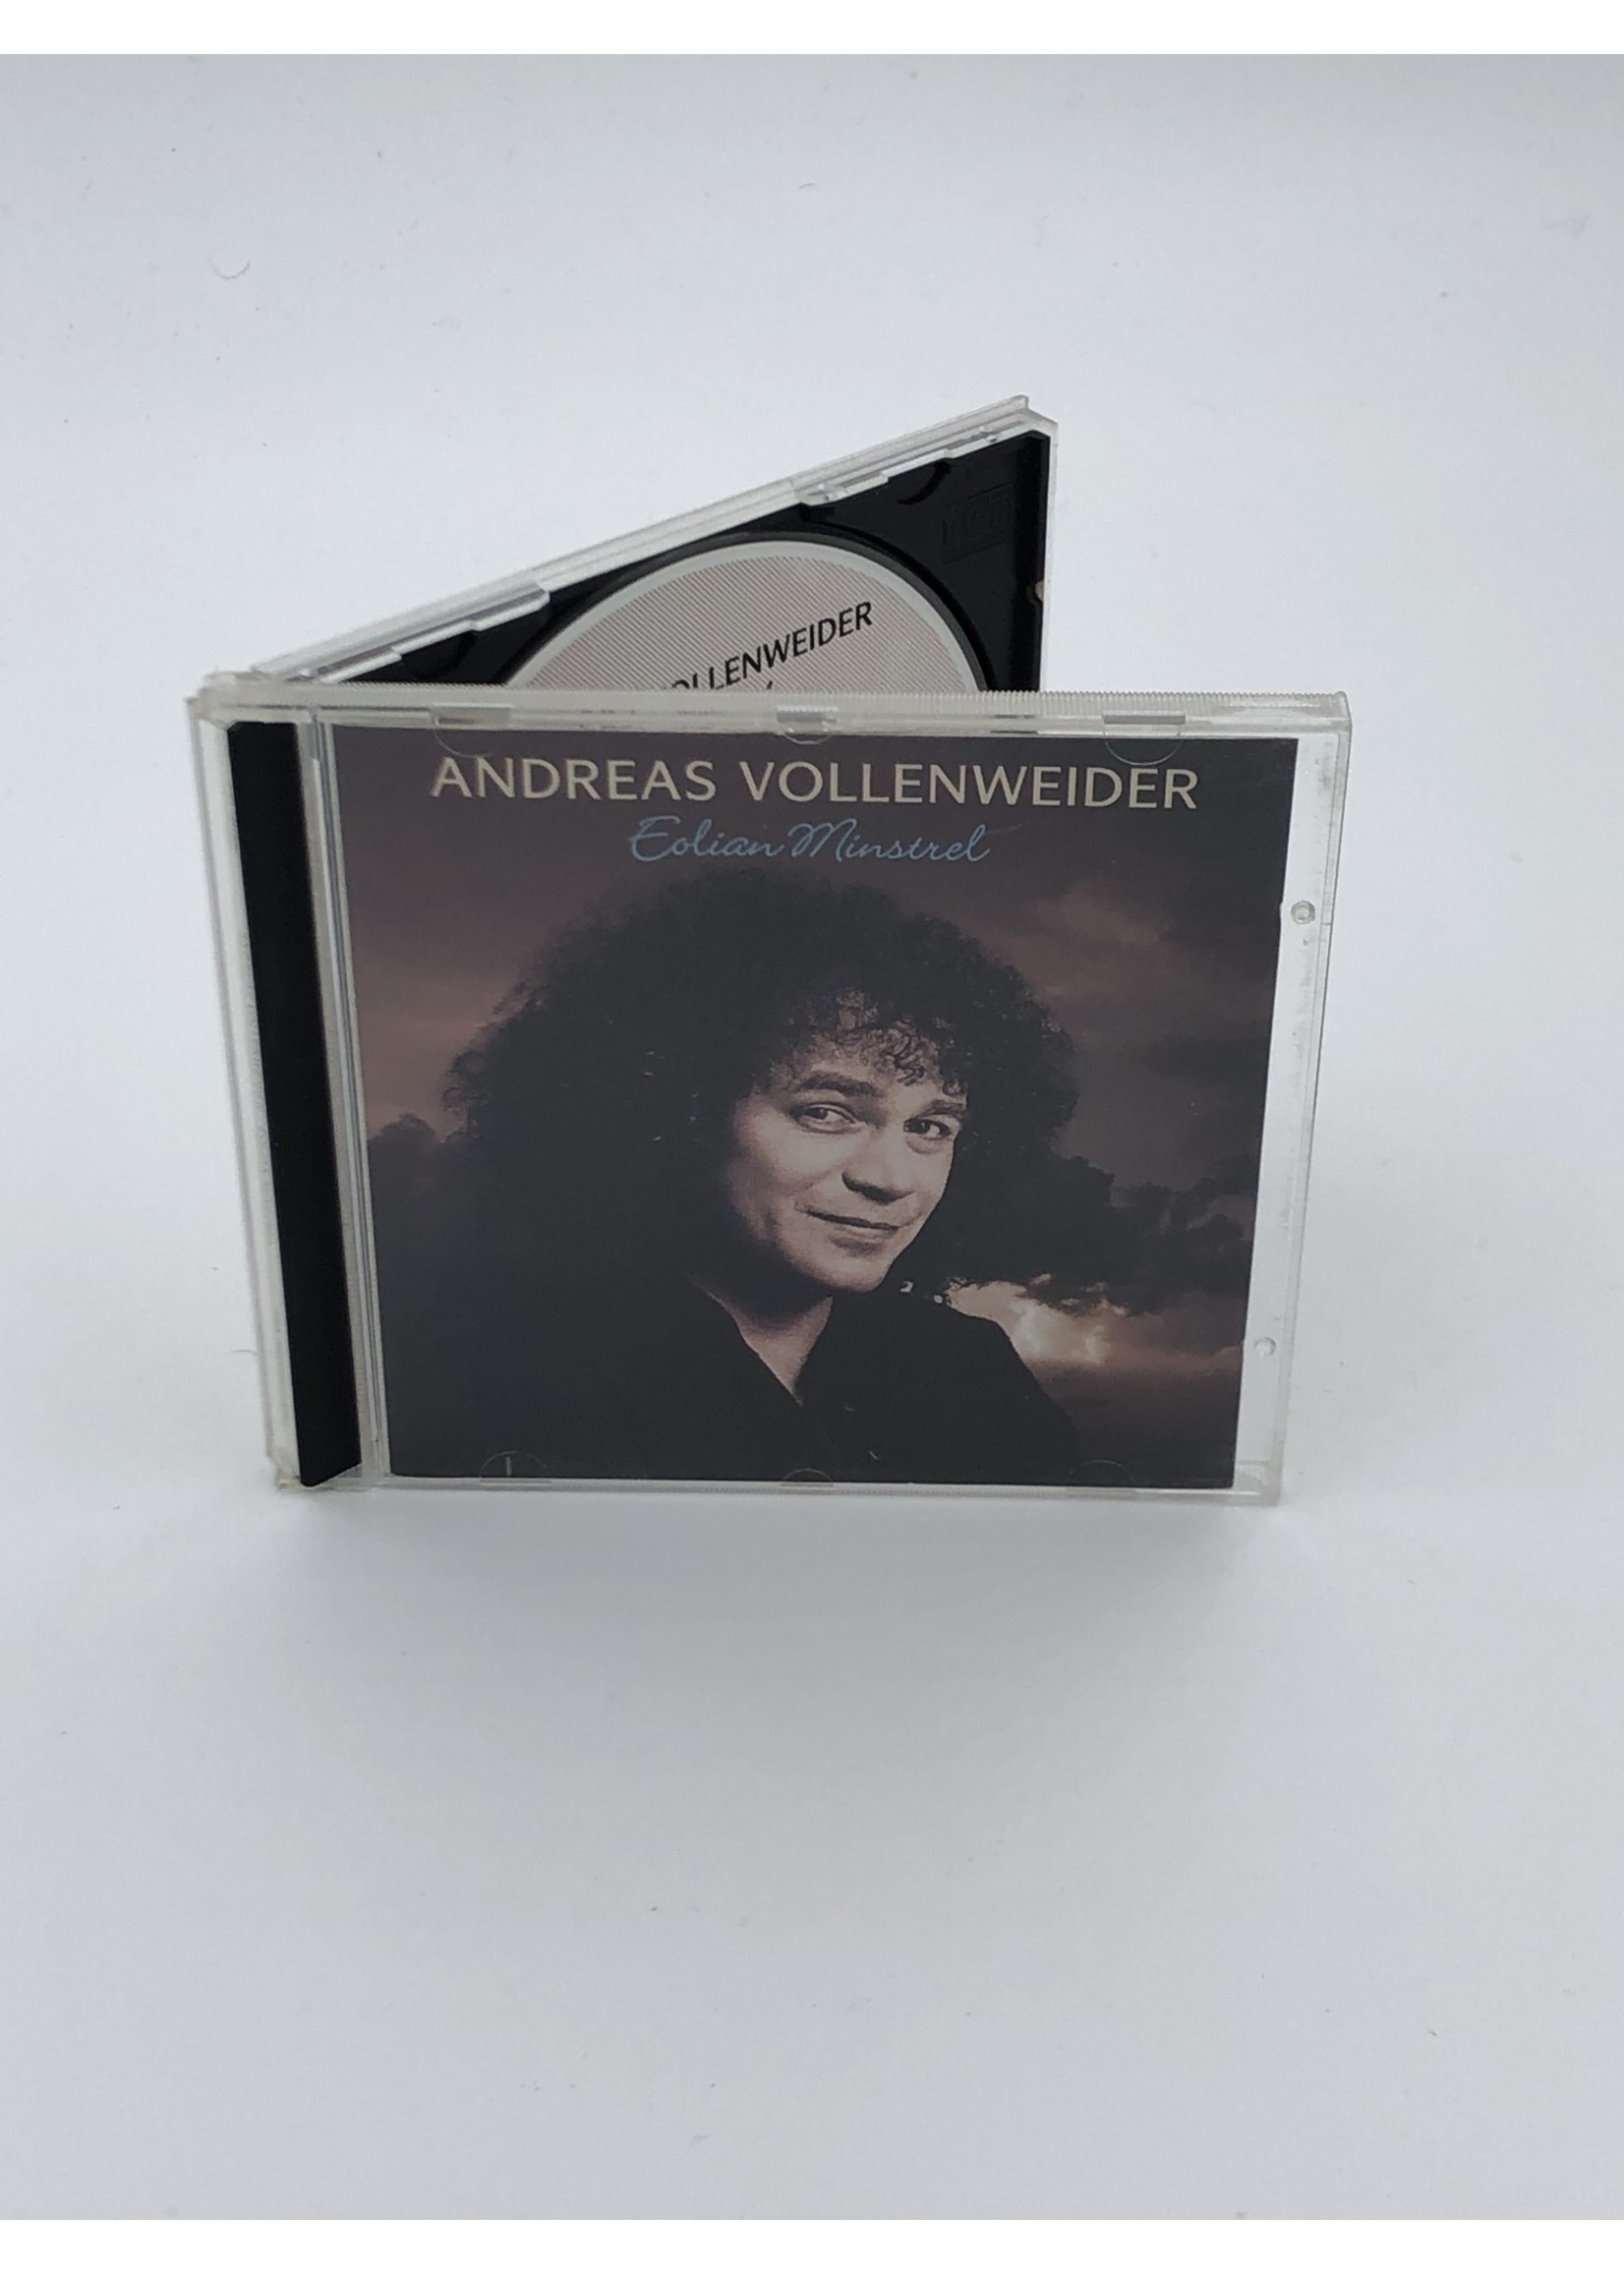 CD Andreas Vollenweider: Eolian Minstrel CD